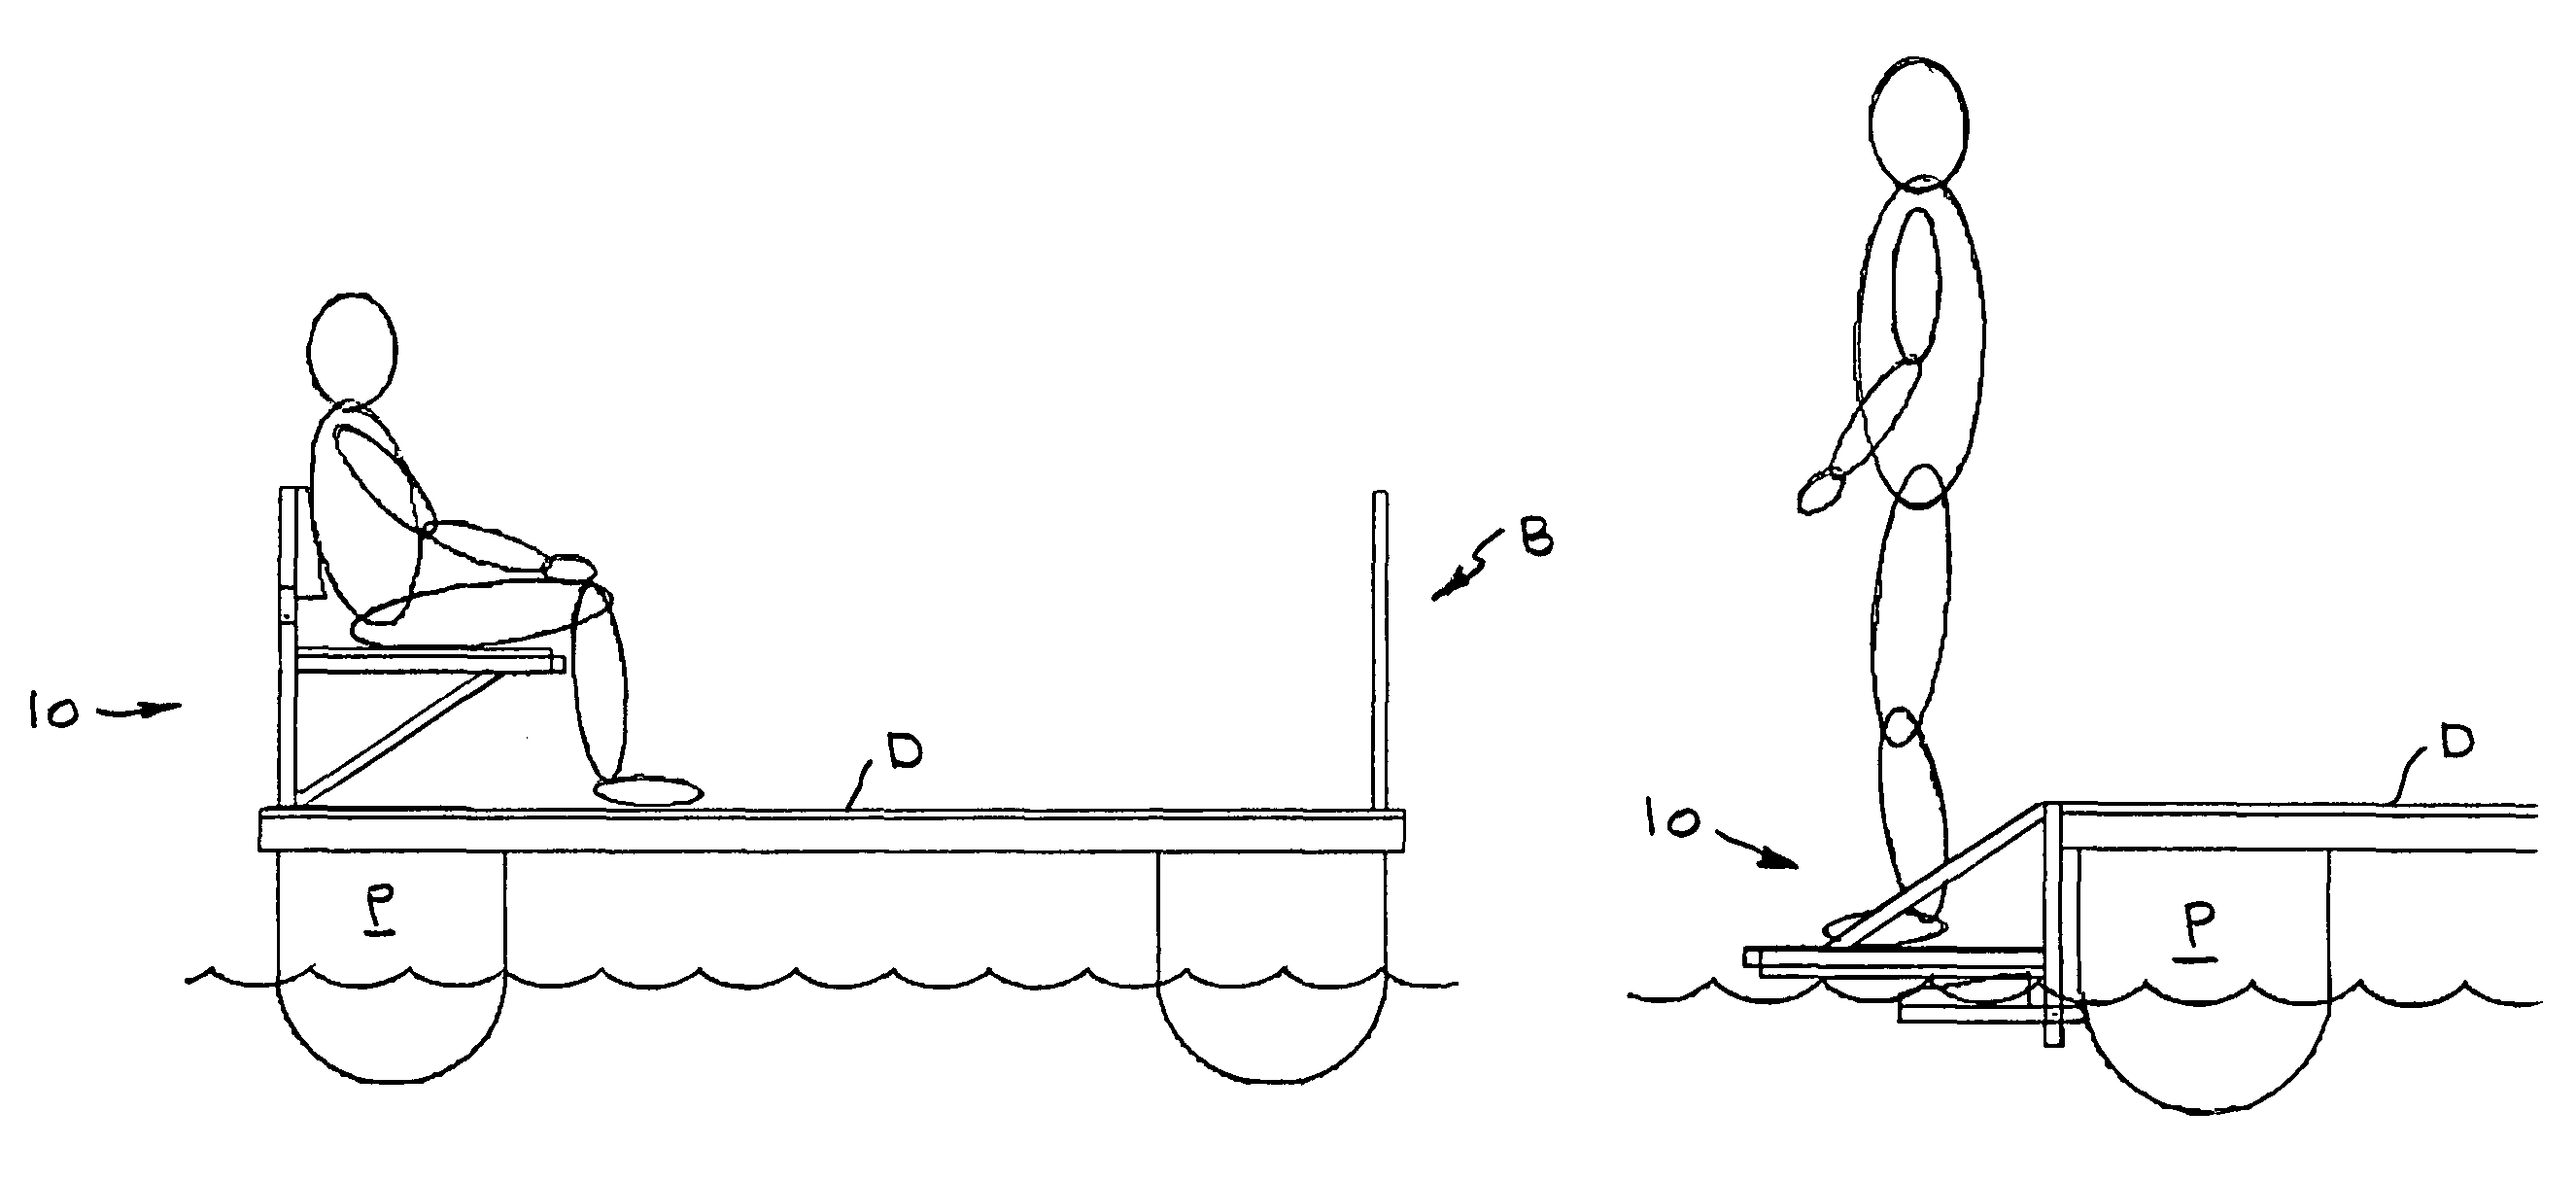 Convertible bench seat/platform for pontoon boats